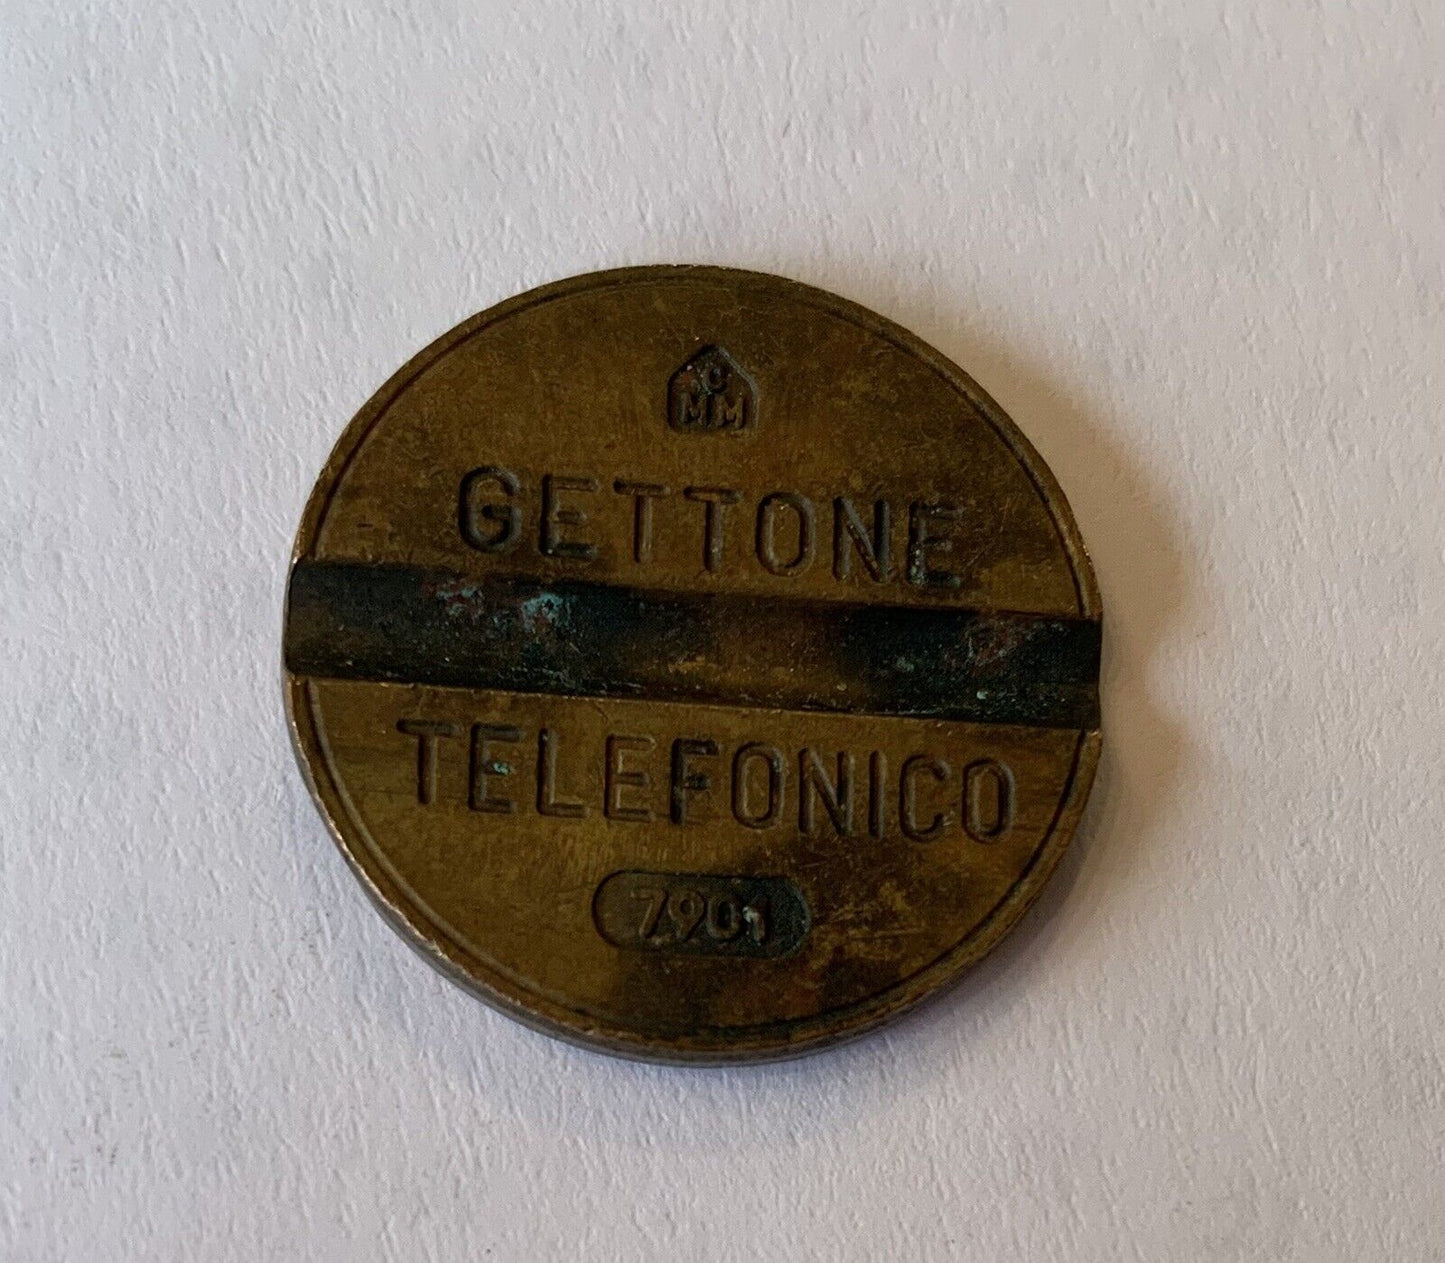 GETTONE TELEFONICO 7901